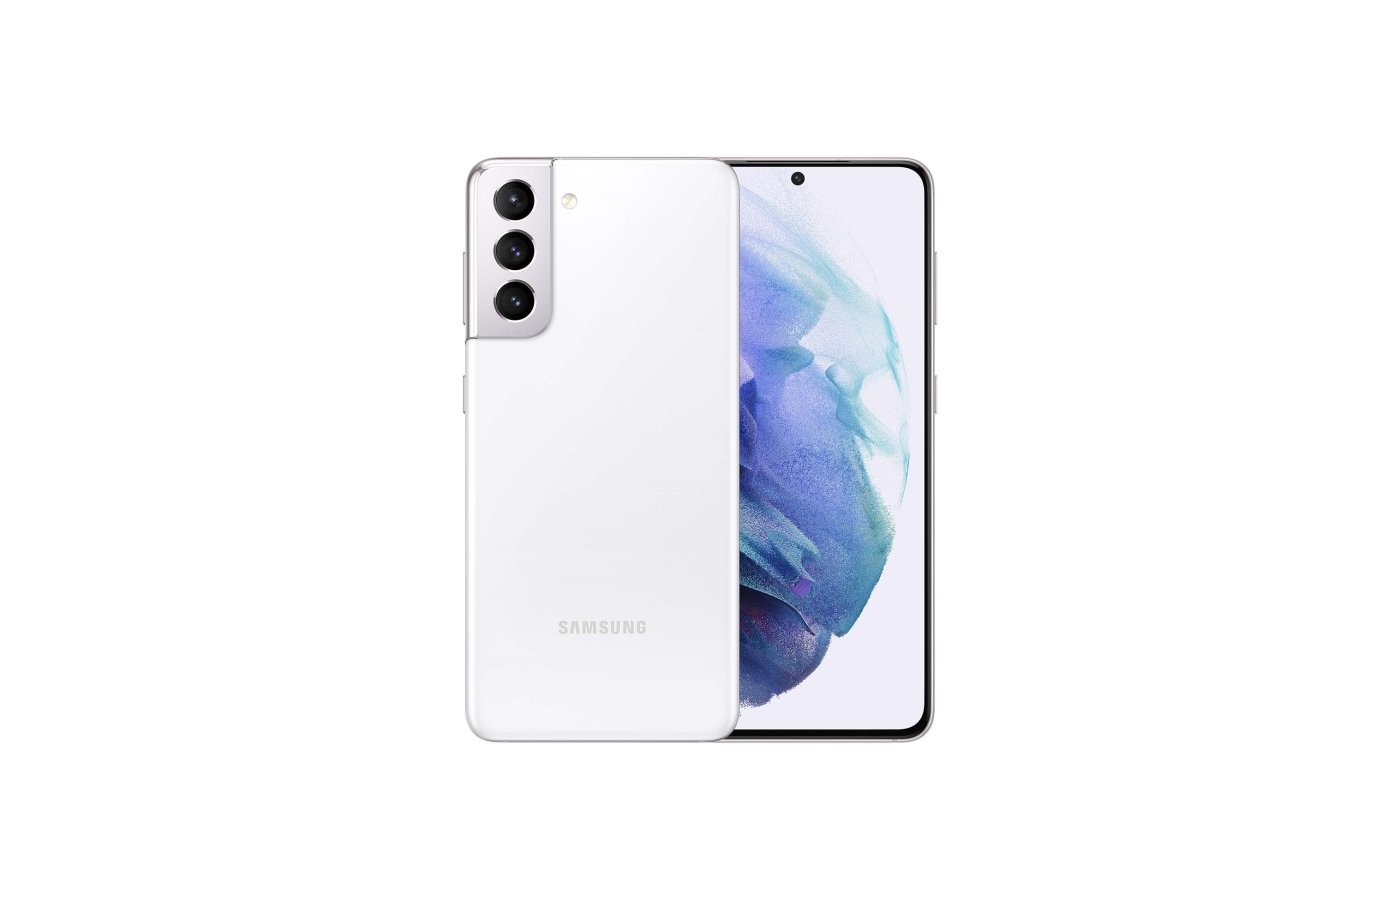 Смартфон Samsung Galaxy S9 256gb